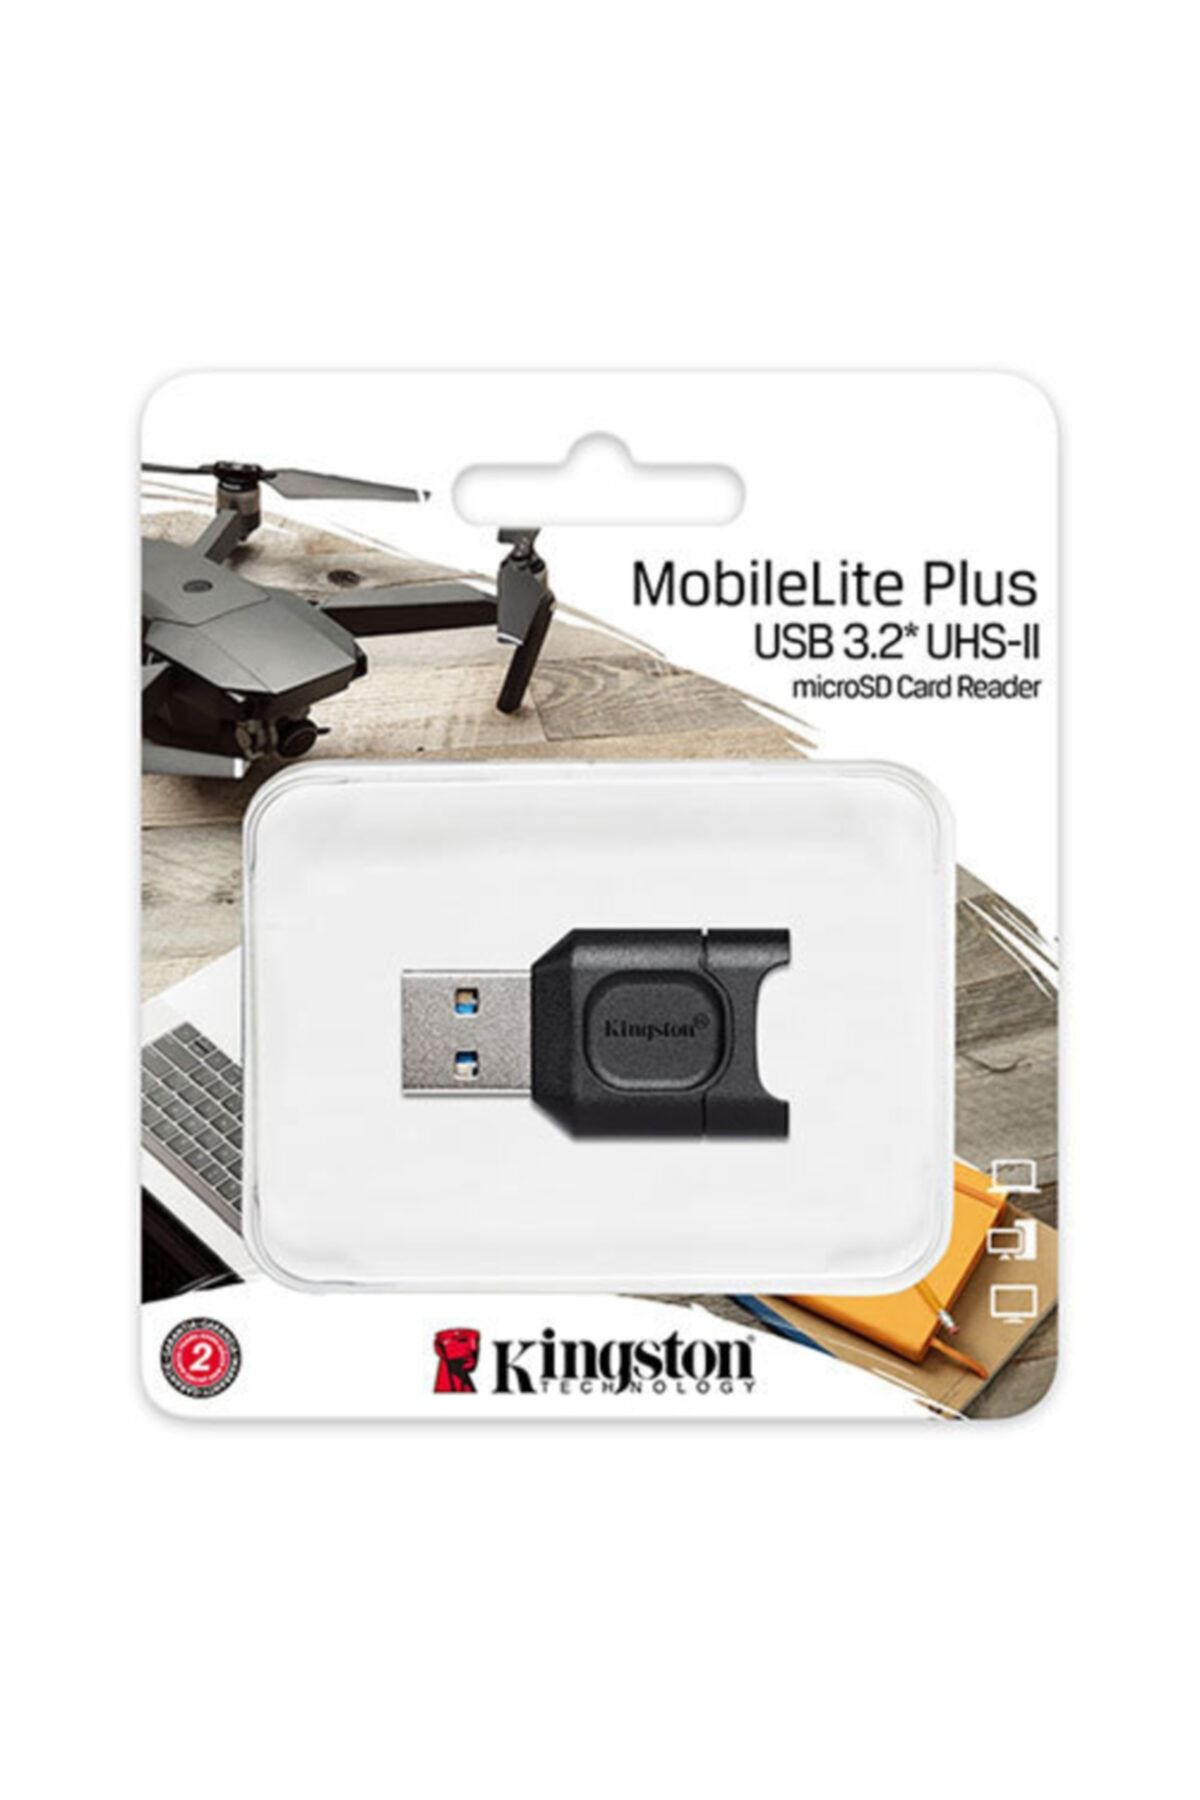 Kingston Mlpm Mobilelite Plus Usb 3.1 Microsdhc-sdxc Uhs-ıı Card